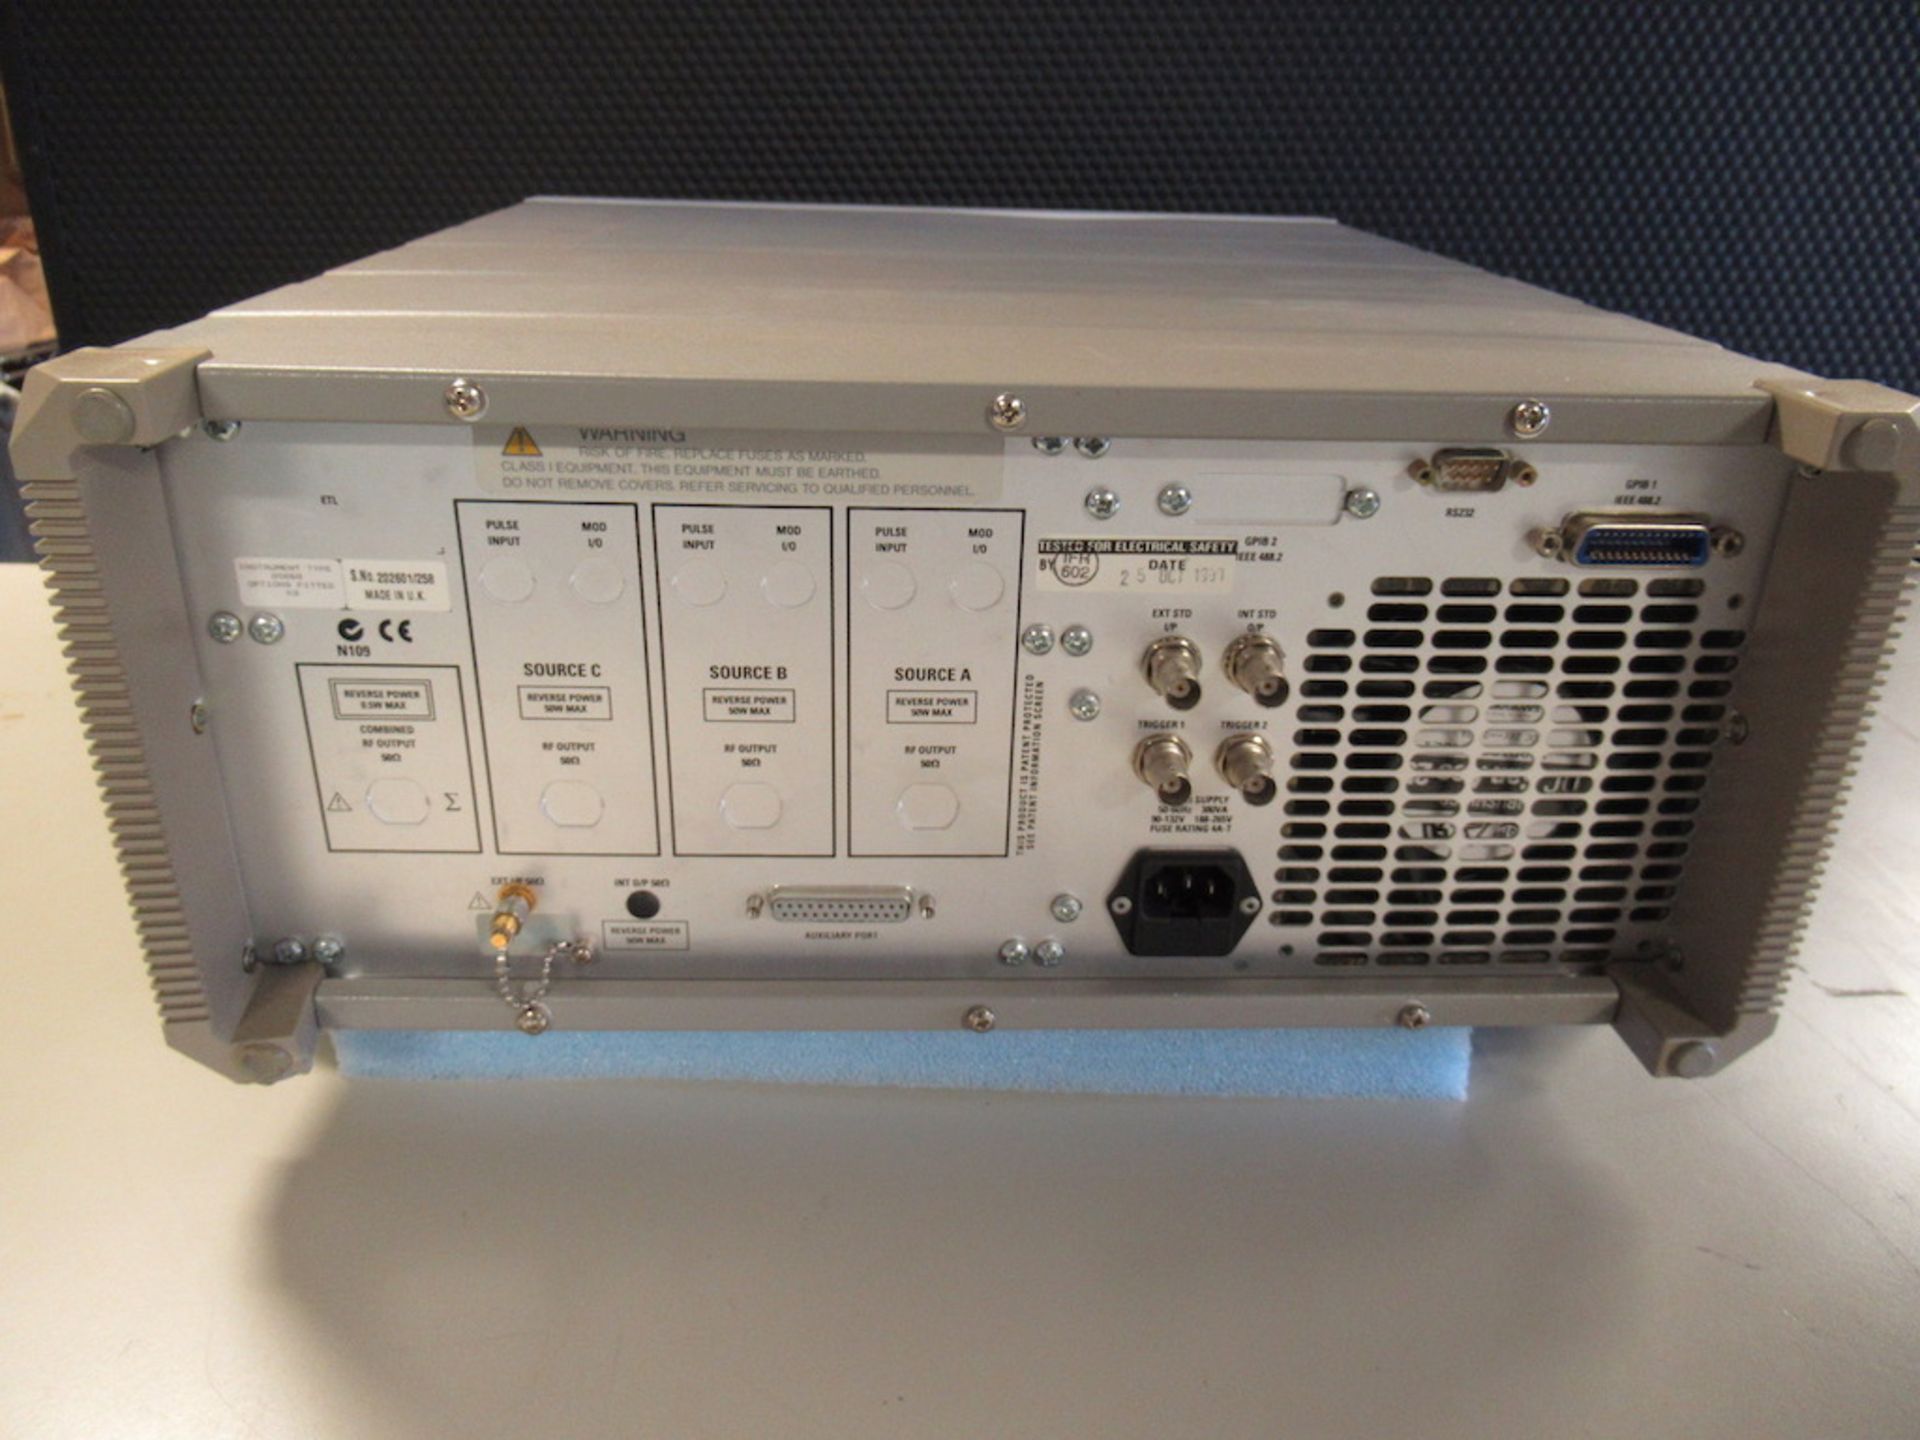 Marconi_2026Q: Cdma Interferer Multisource Generator With Option 03 - Image 4 of 6